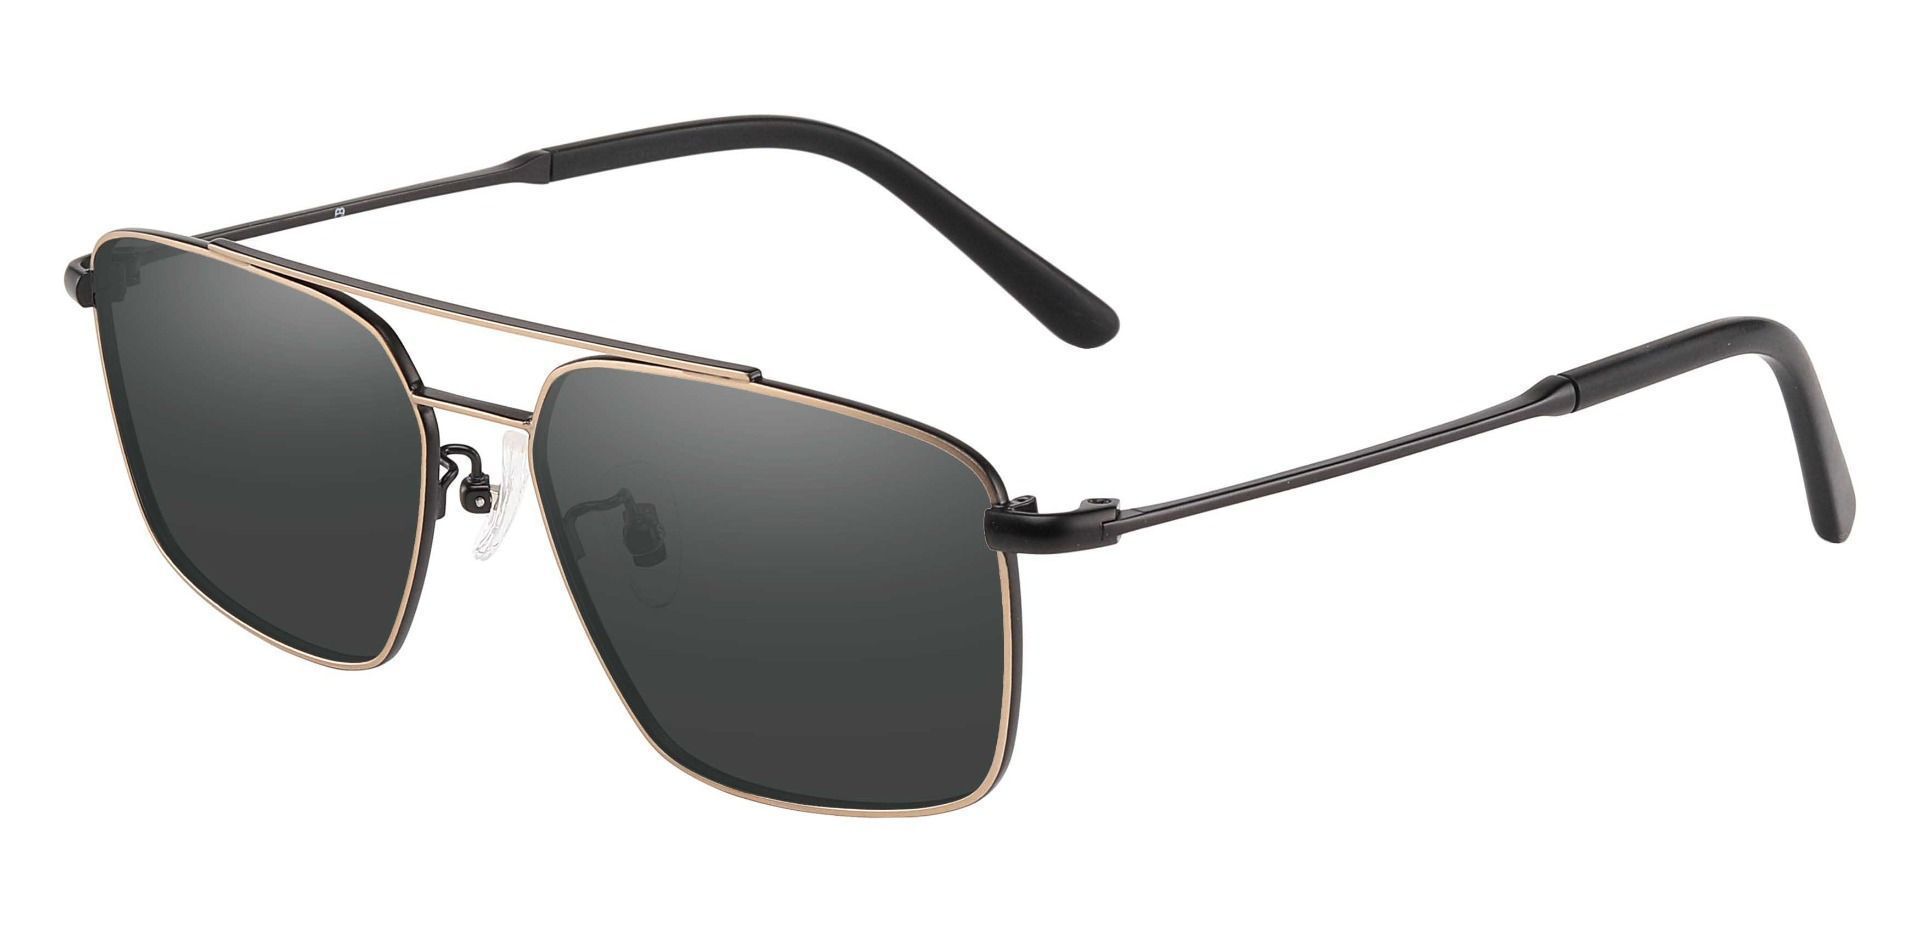 Barlow Aviator Progressive Sunglasses - Gold Frame With Gray Lenses